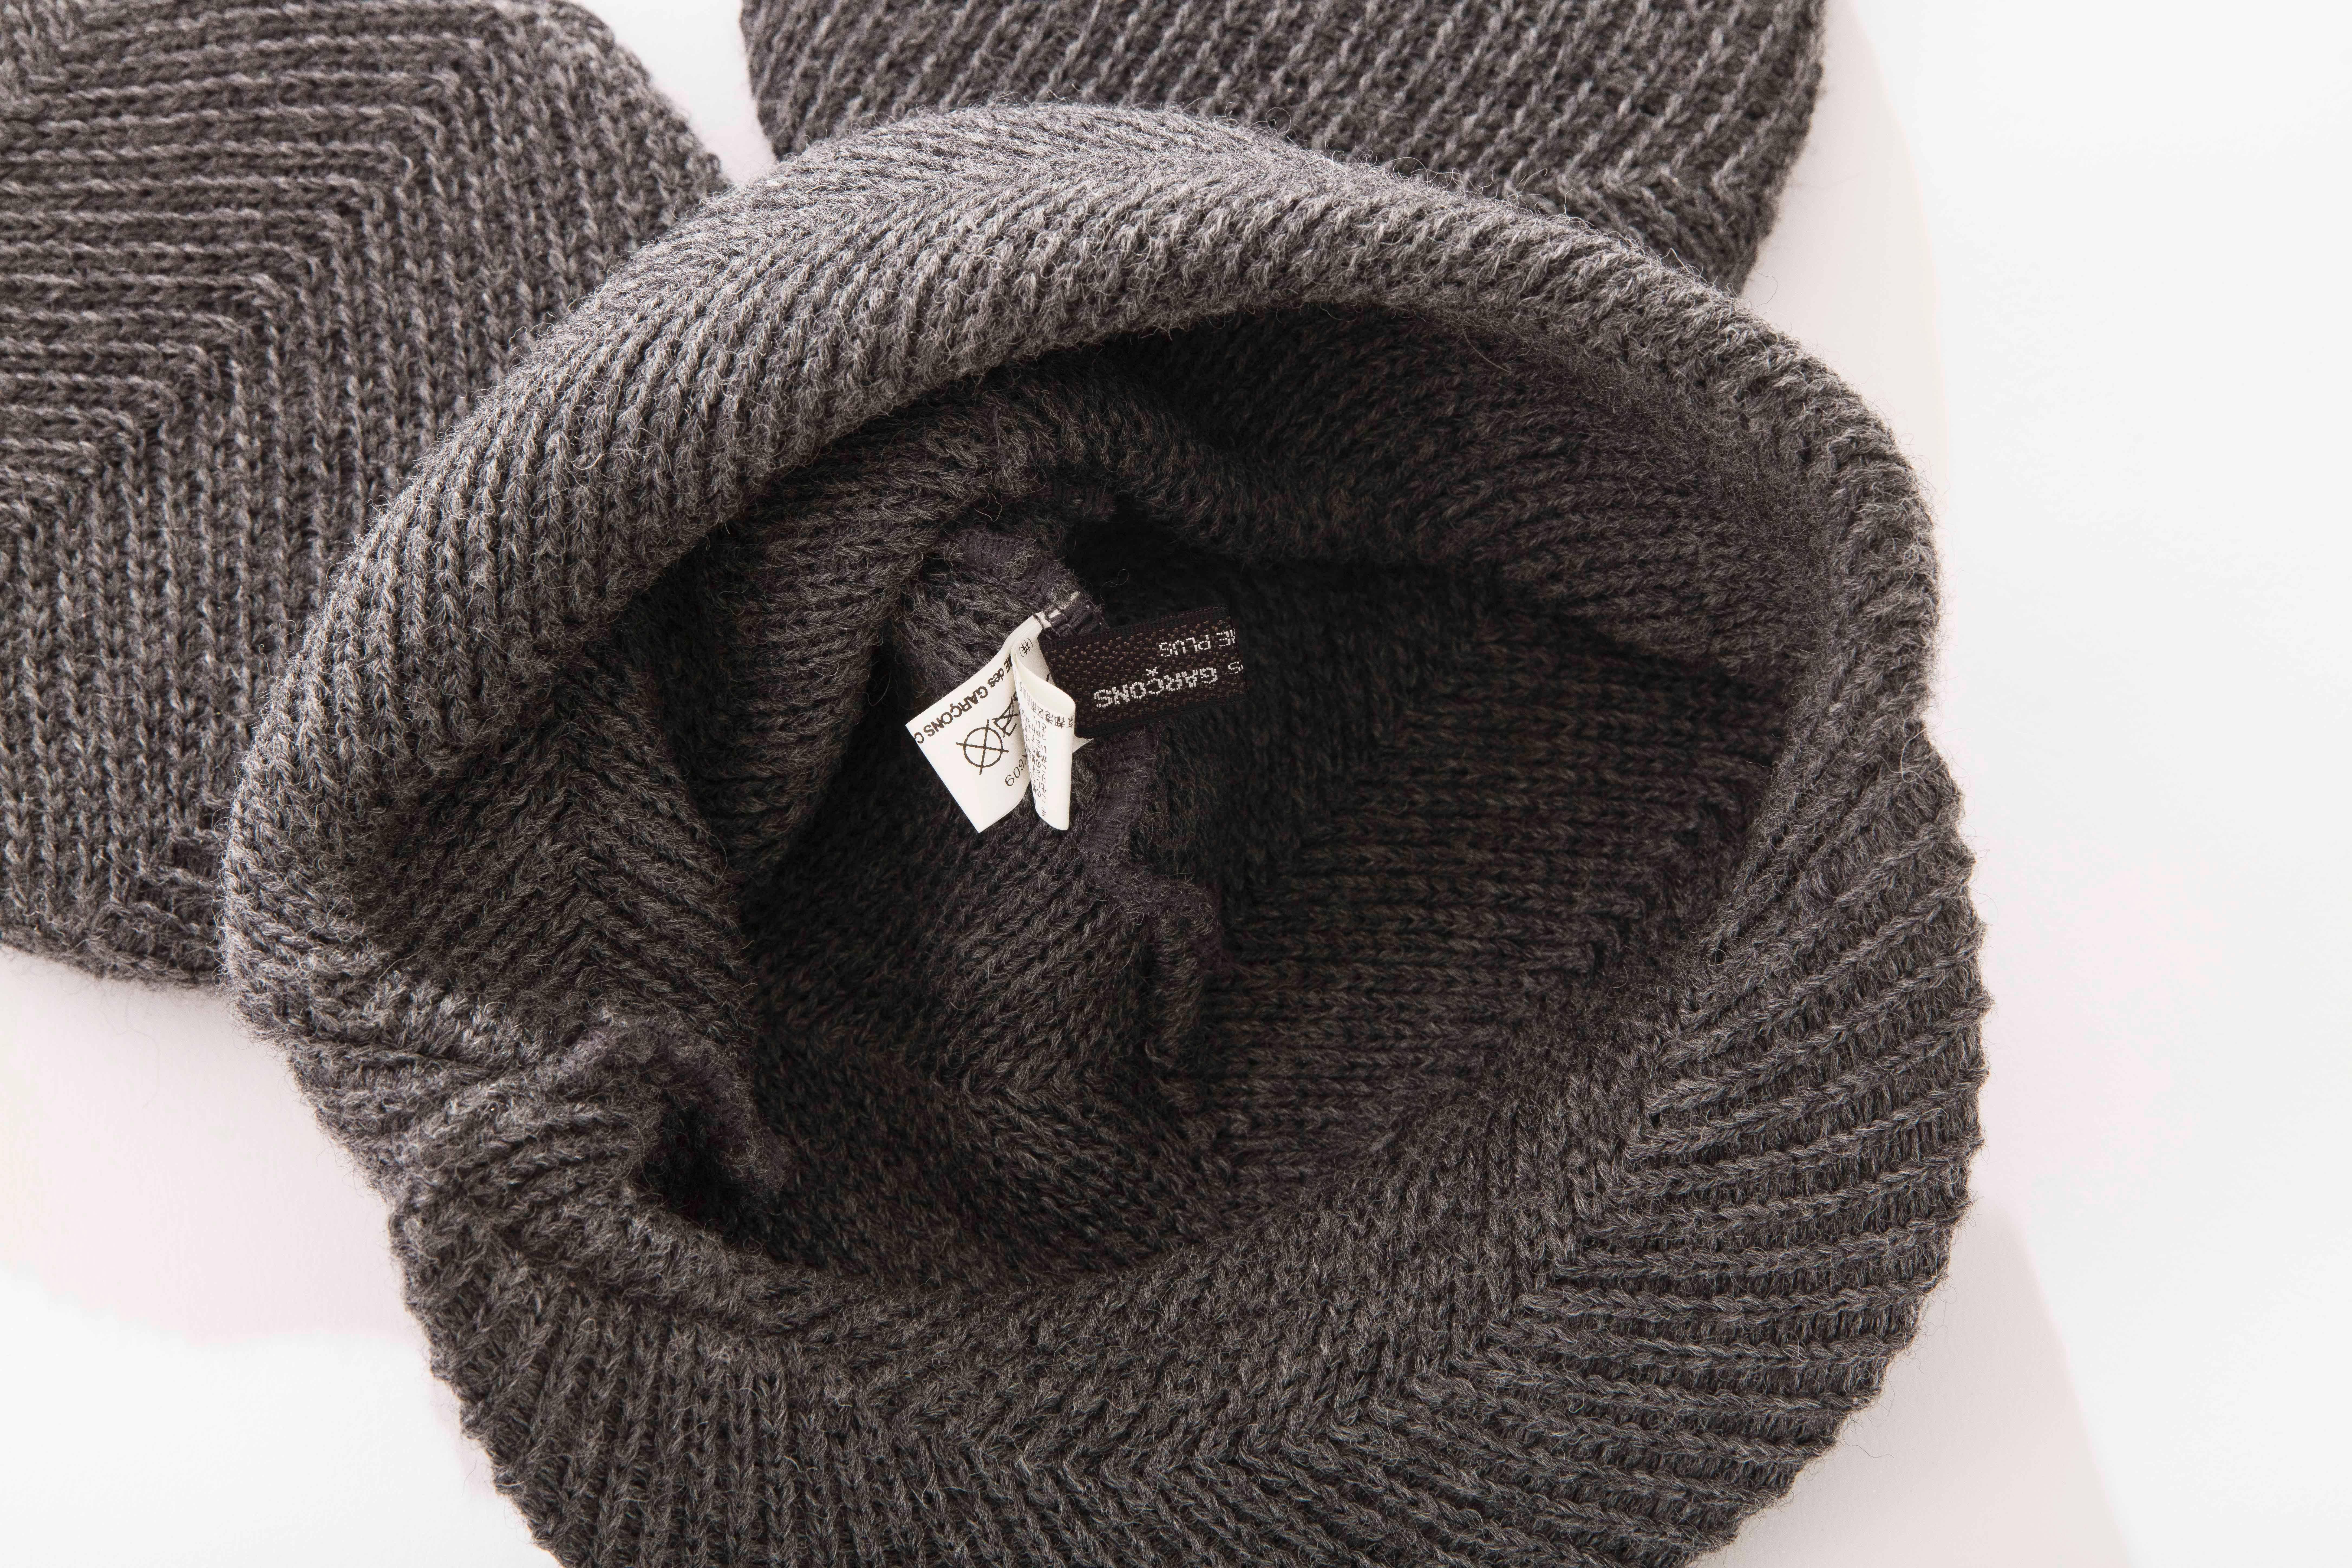 Comme des Garcons Stephen Jones Grey Wool Herringbone Mouse Ears Hat, Fall 2013 1